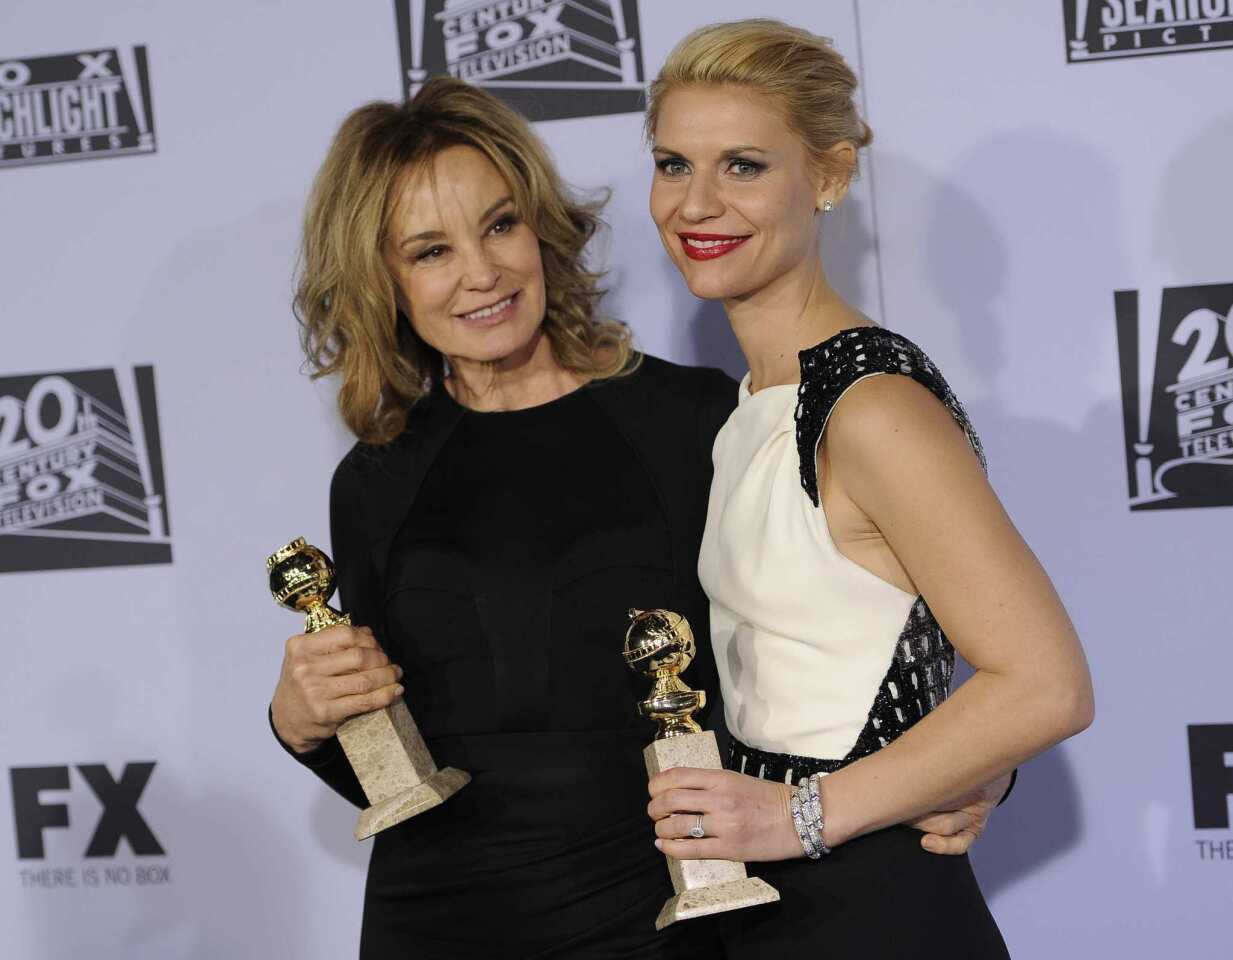 Fox's Golden Globes awards party